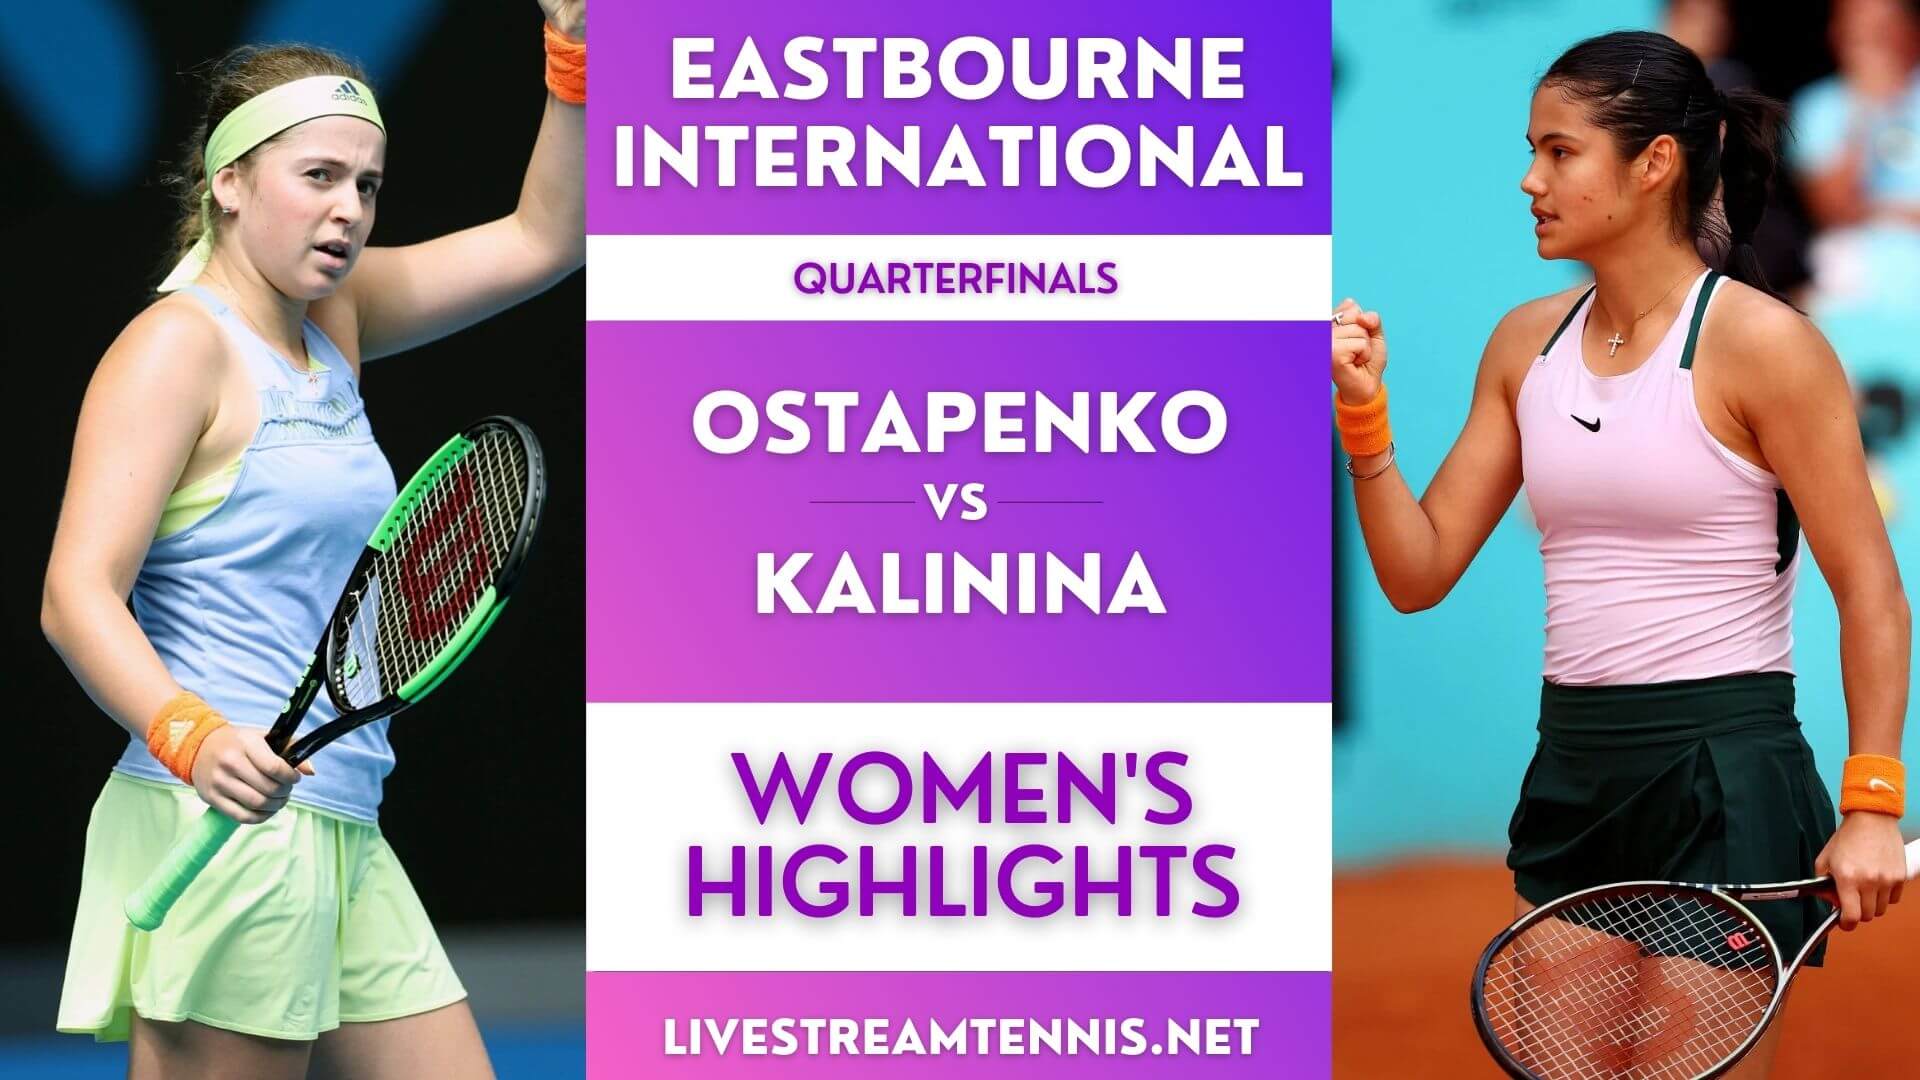 Eastbourne International Ladies Quarterfinal 1 Highlights 2022